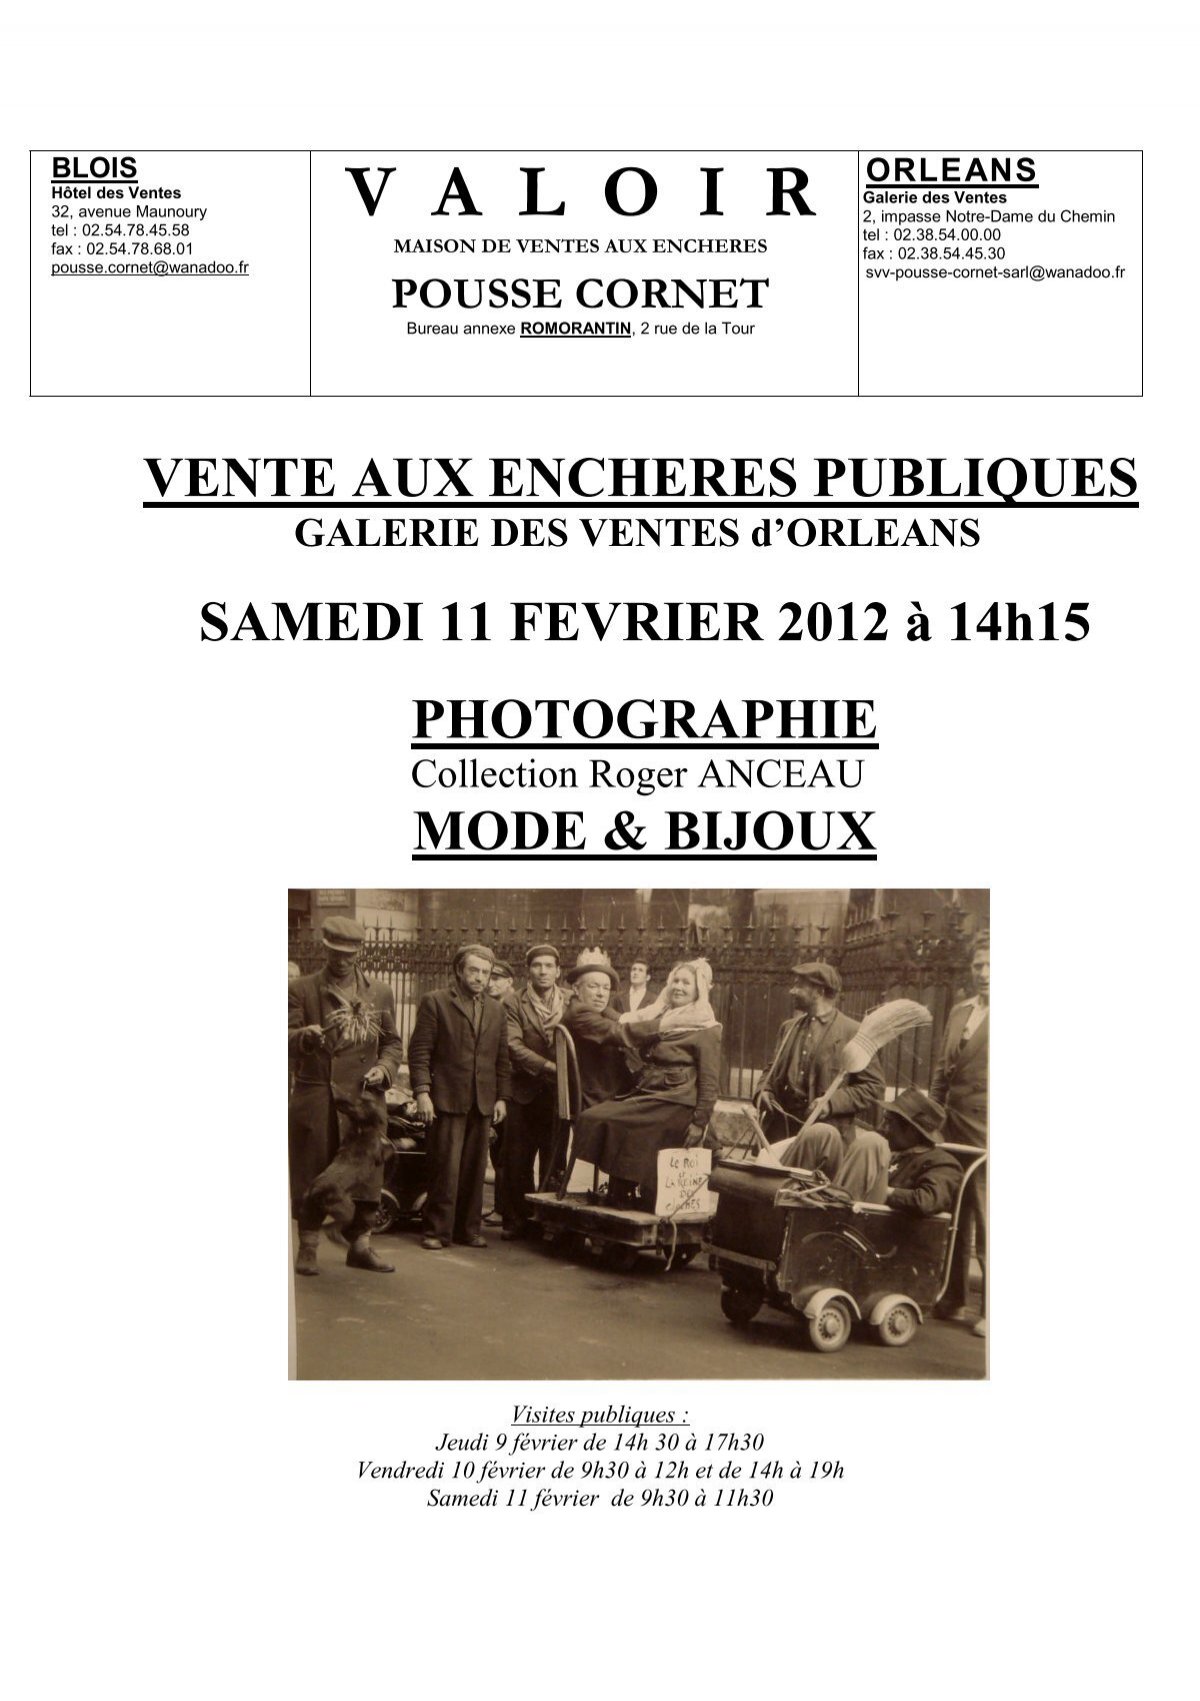 Bonnet Aubert laine homme - Marine / Hermès - Made in France